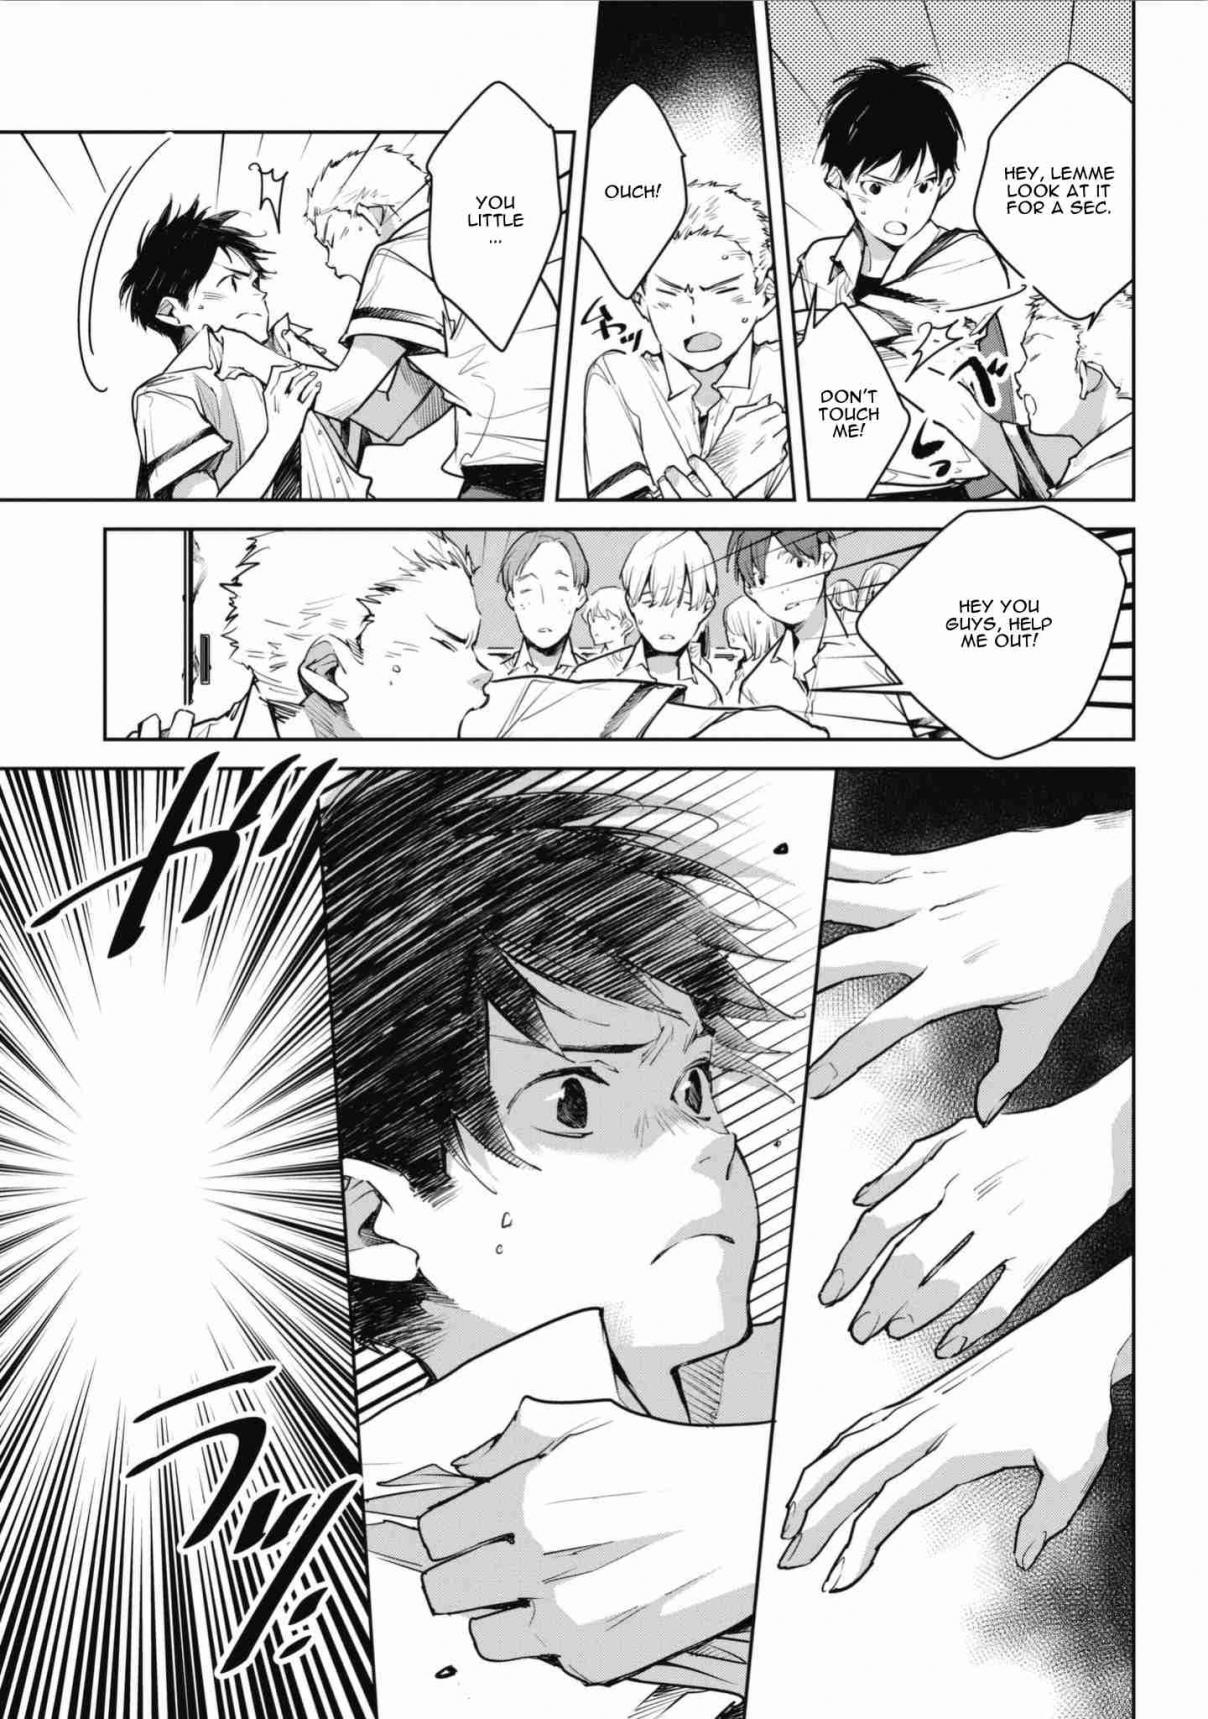 Okashiratsuki Vol. 1 Ch. 6 Kieta Oppo "Turning Tail"